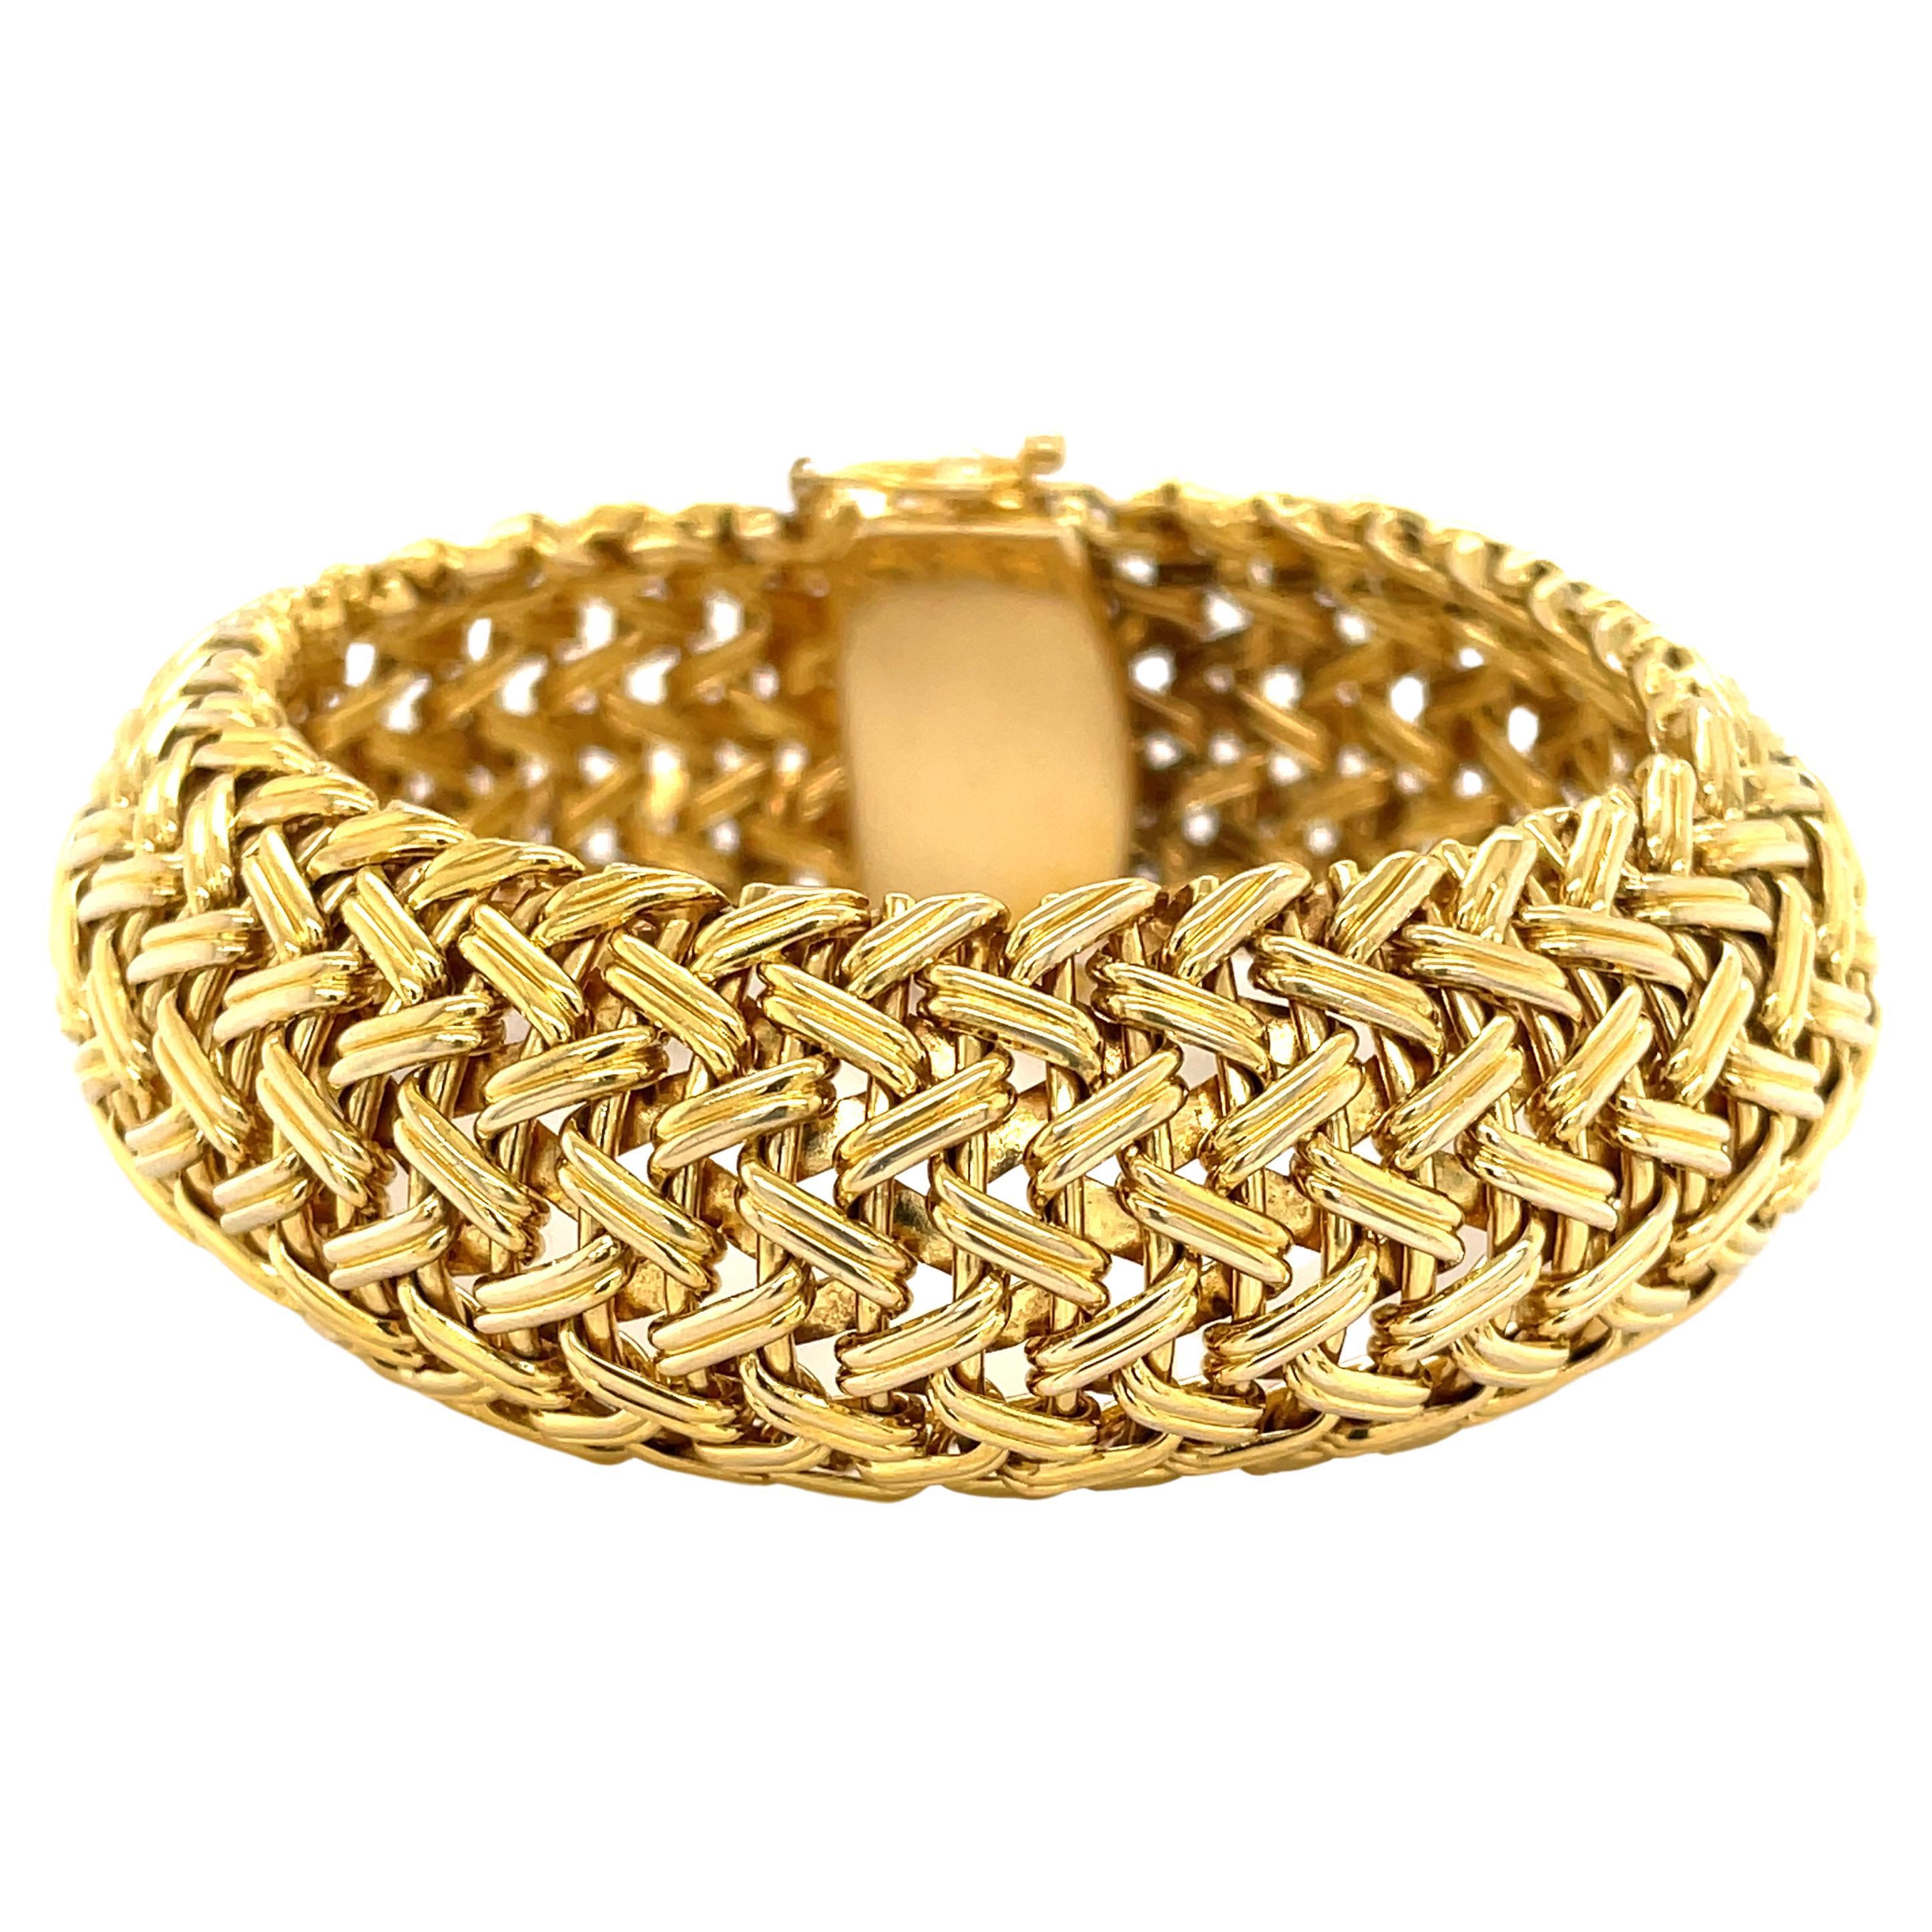 Retro Style Contoured Woven 14 Karat Yellow Gold Bracelet For Sale